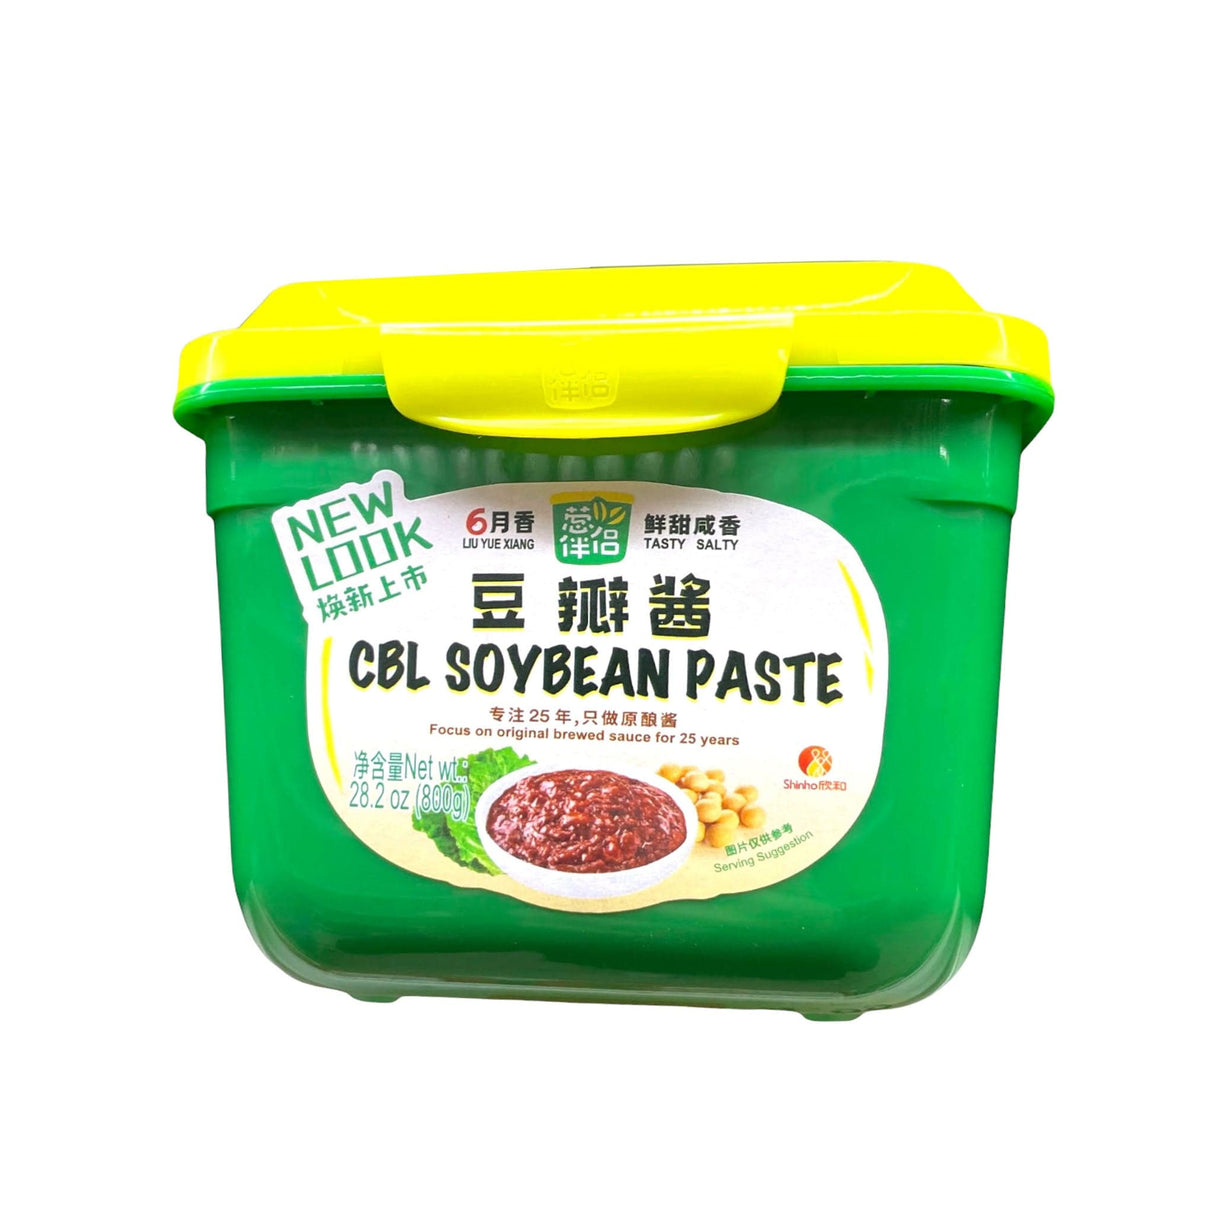 Shinho CBL Soybean Paste Tasty Salty